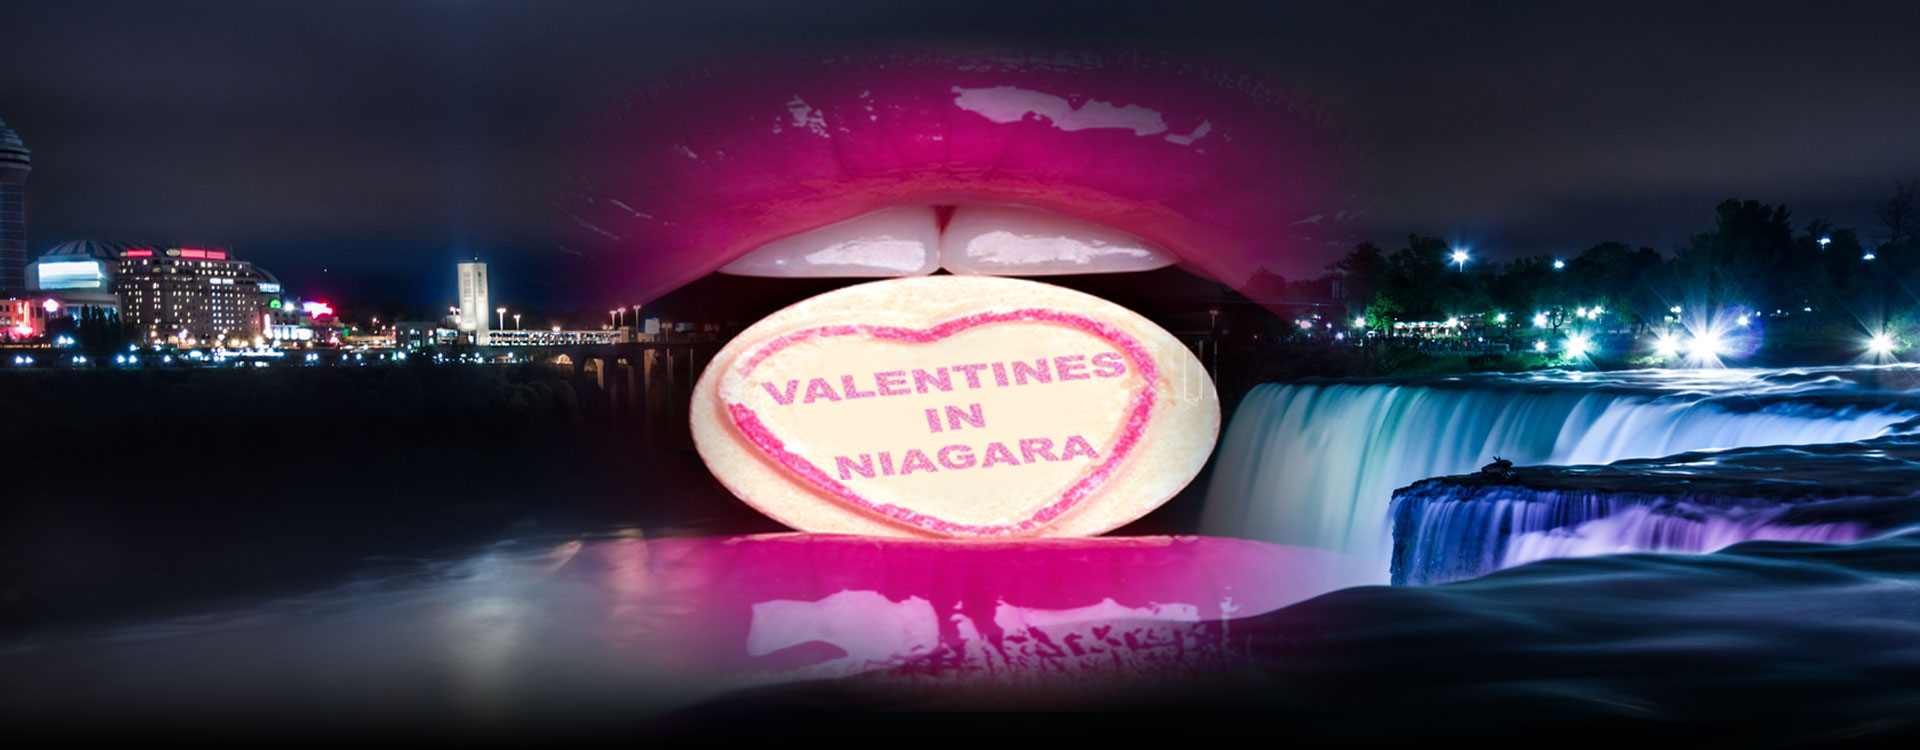 Niagara Falls Swingers Convention, Swingers Event Valentines in Niagara